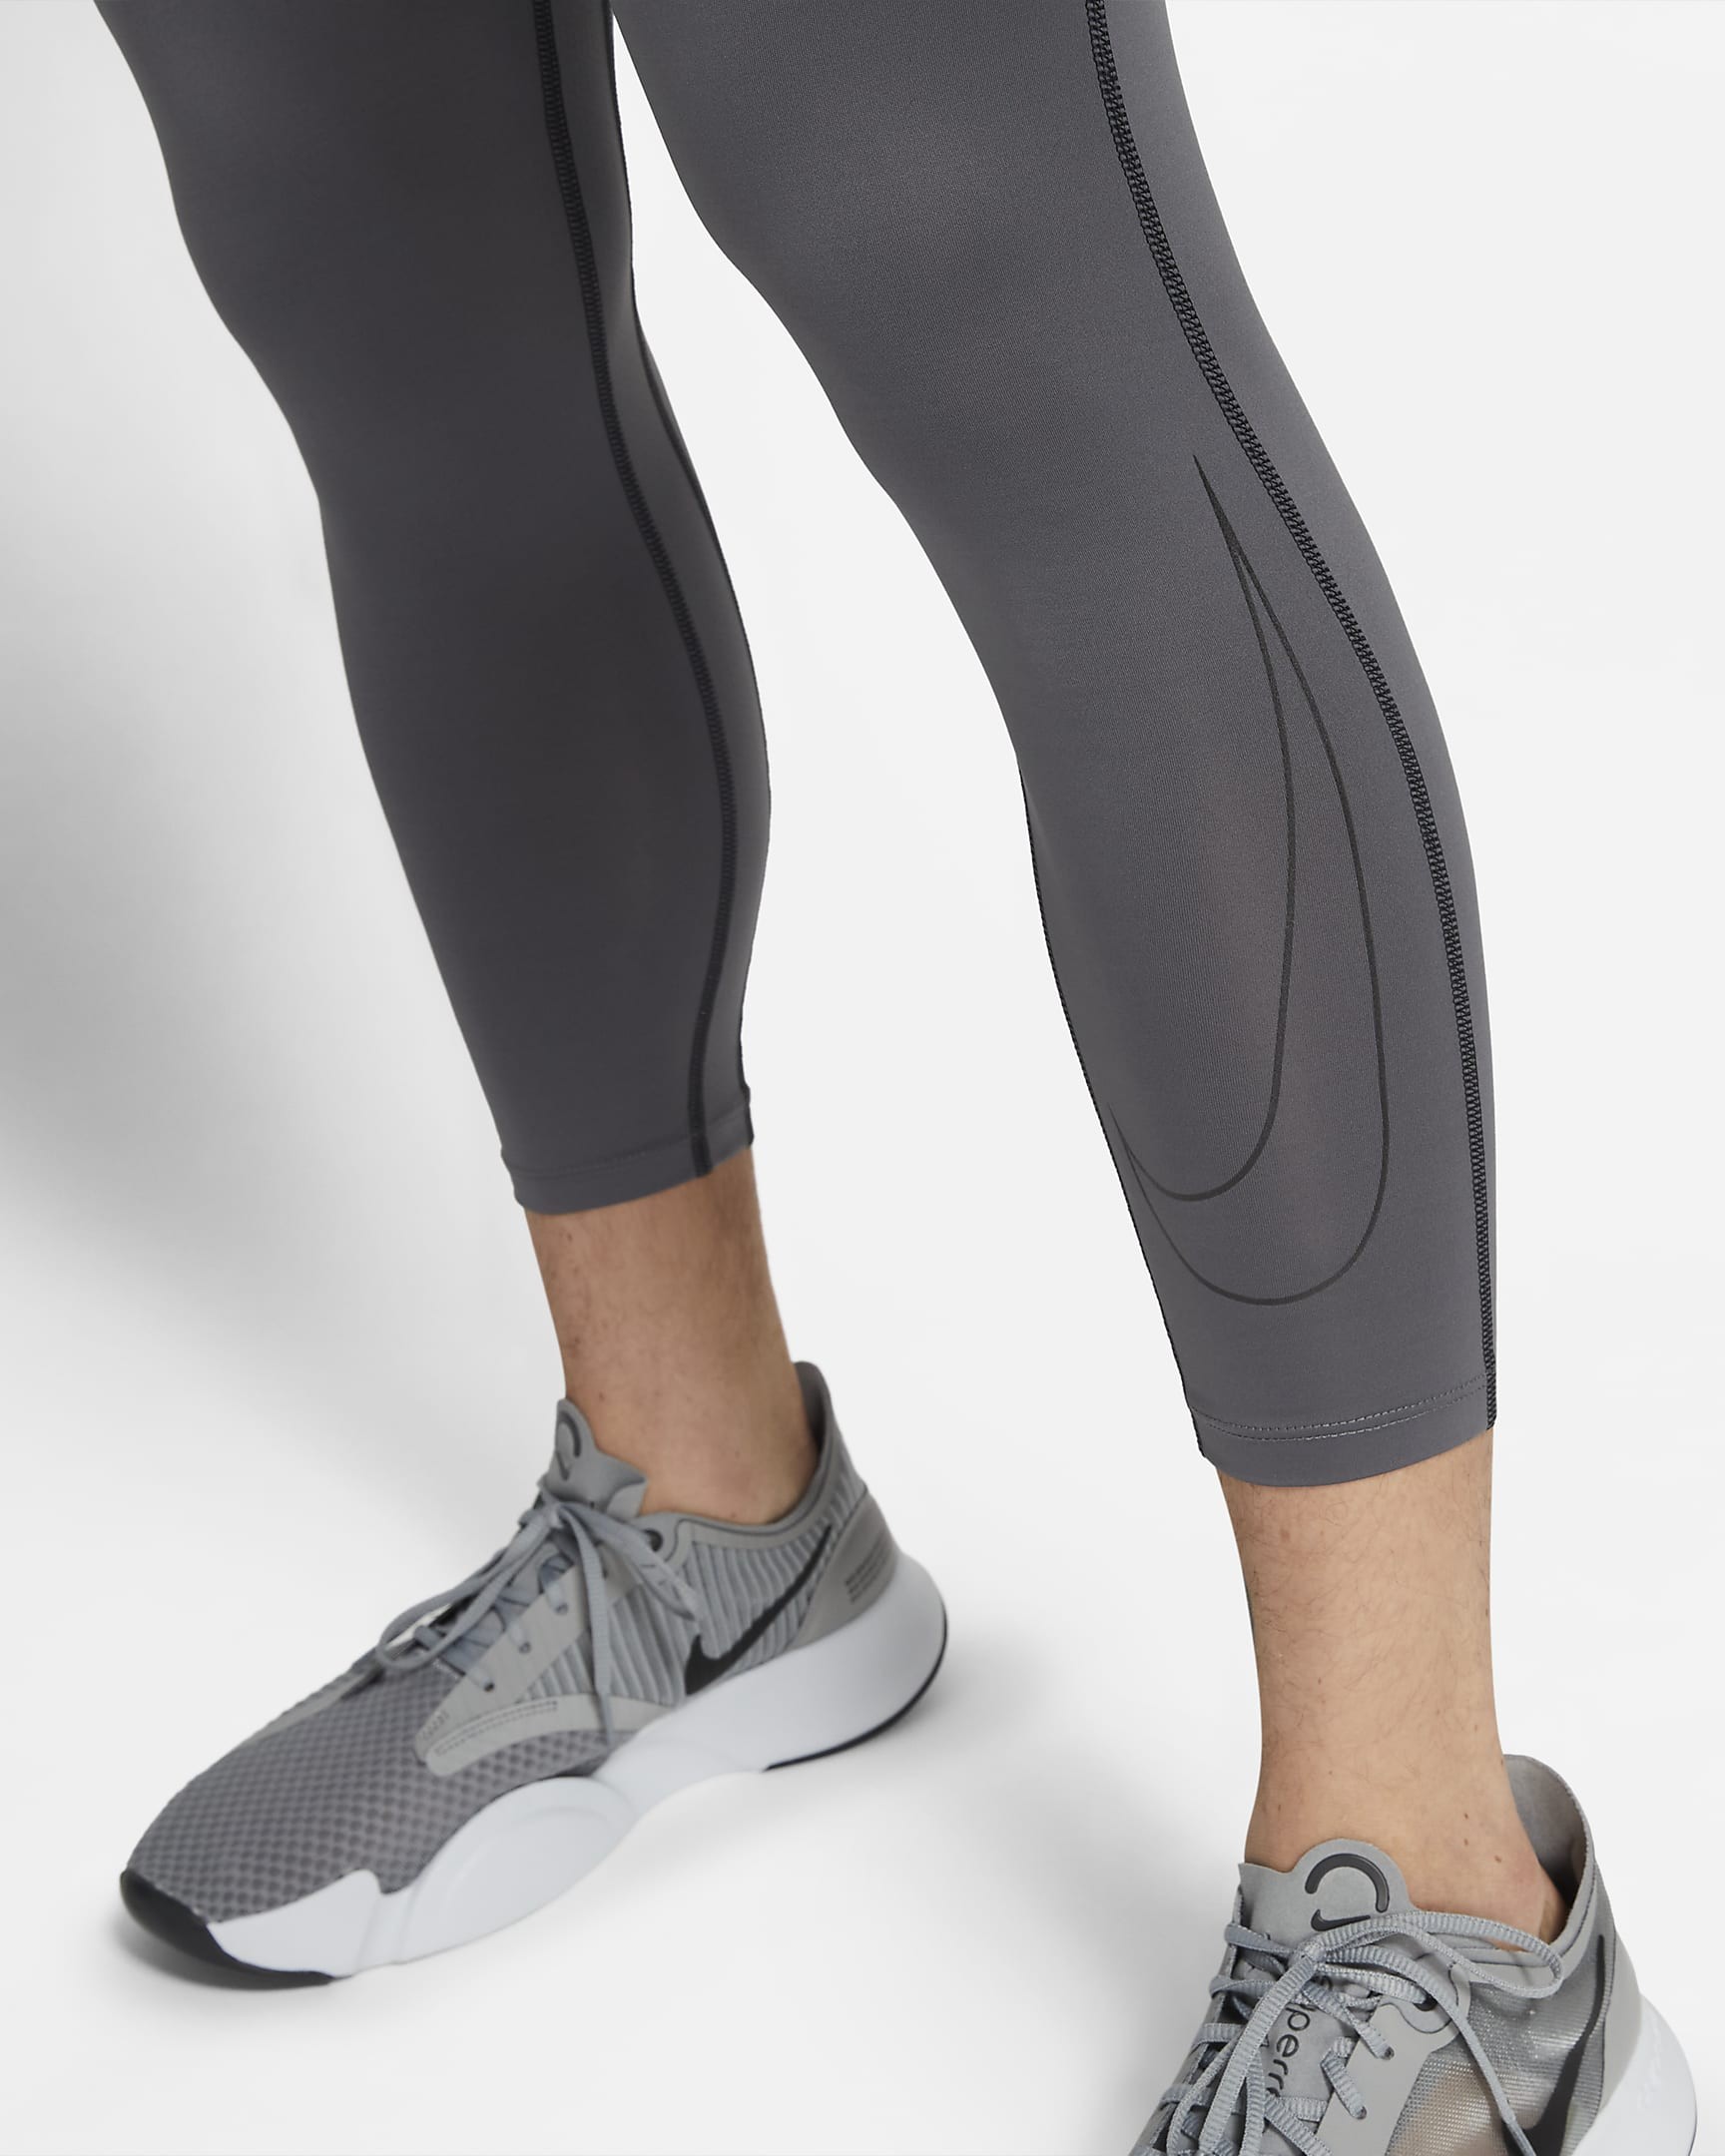 Термоштаны Nike Pro Dri-FIT Tight DD1913-068 купить по выгодной цене